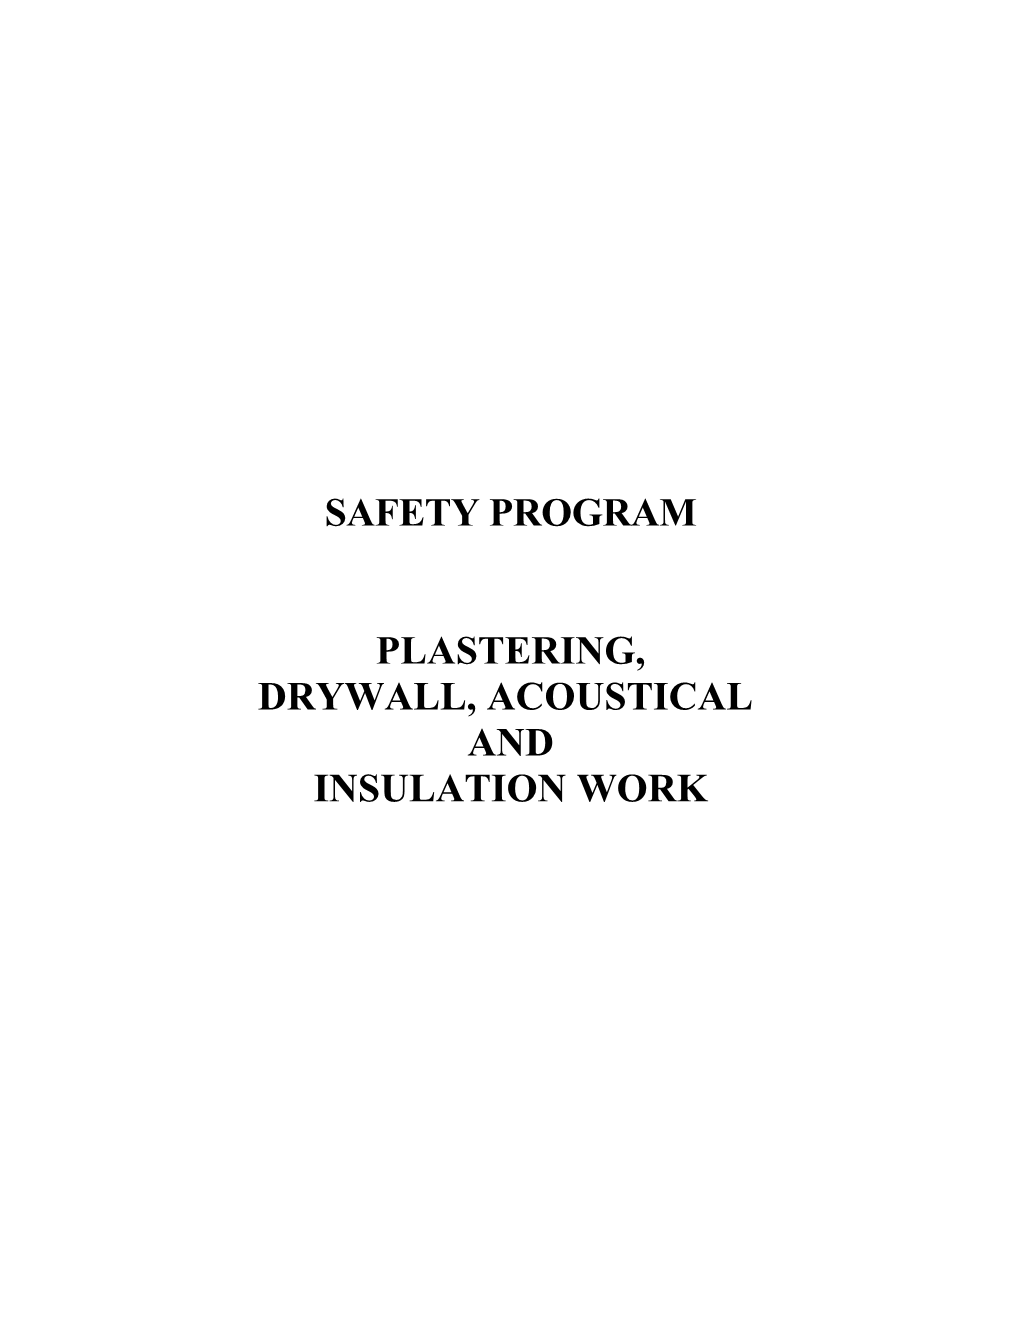 Plastering, Drywall Safety Program